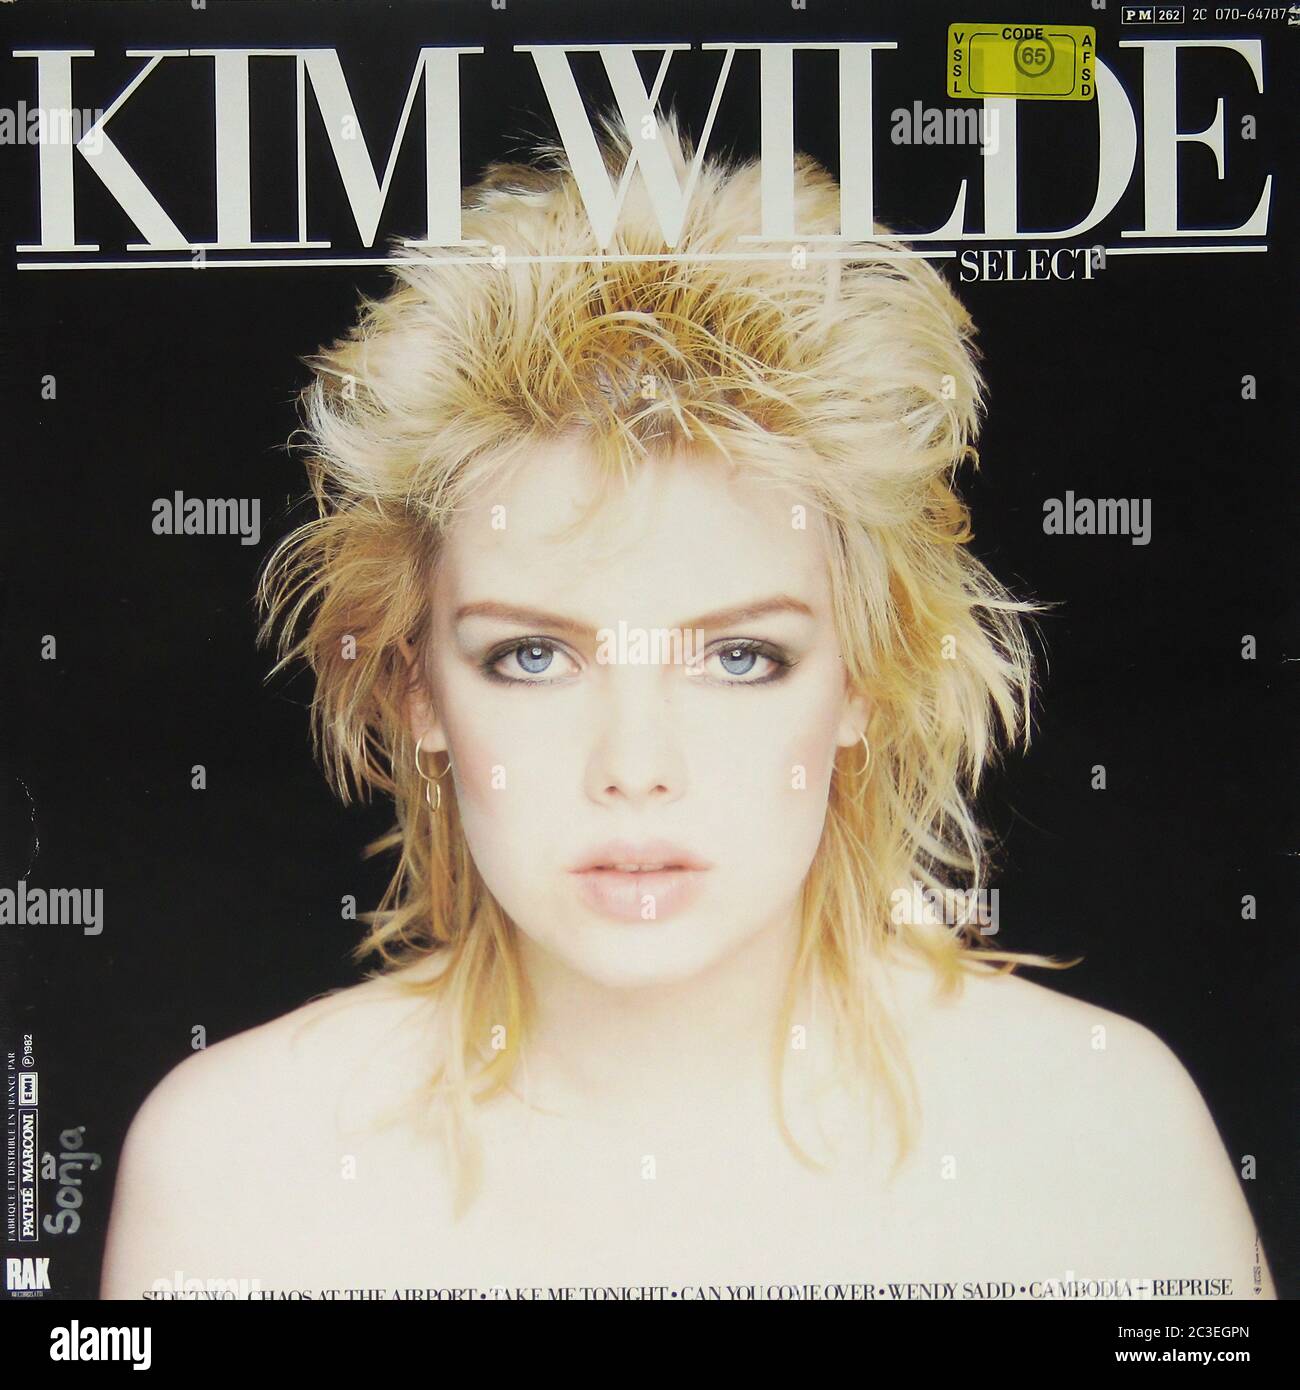 Kim Wilde - Select RAK - Vintage 12'' vinyl LP 01 Cover Stock Photo - Alamy